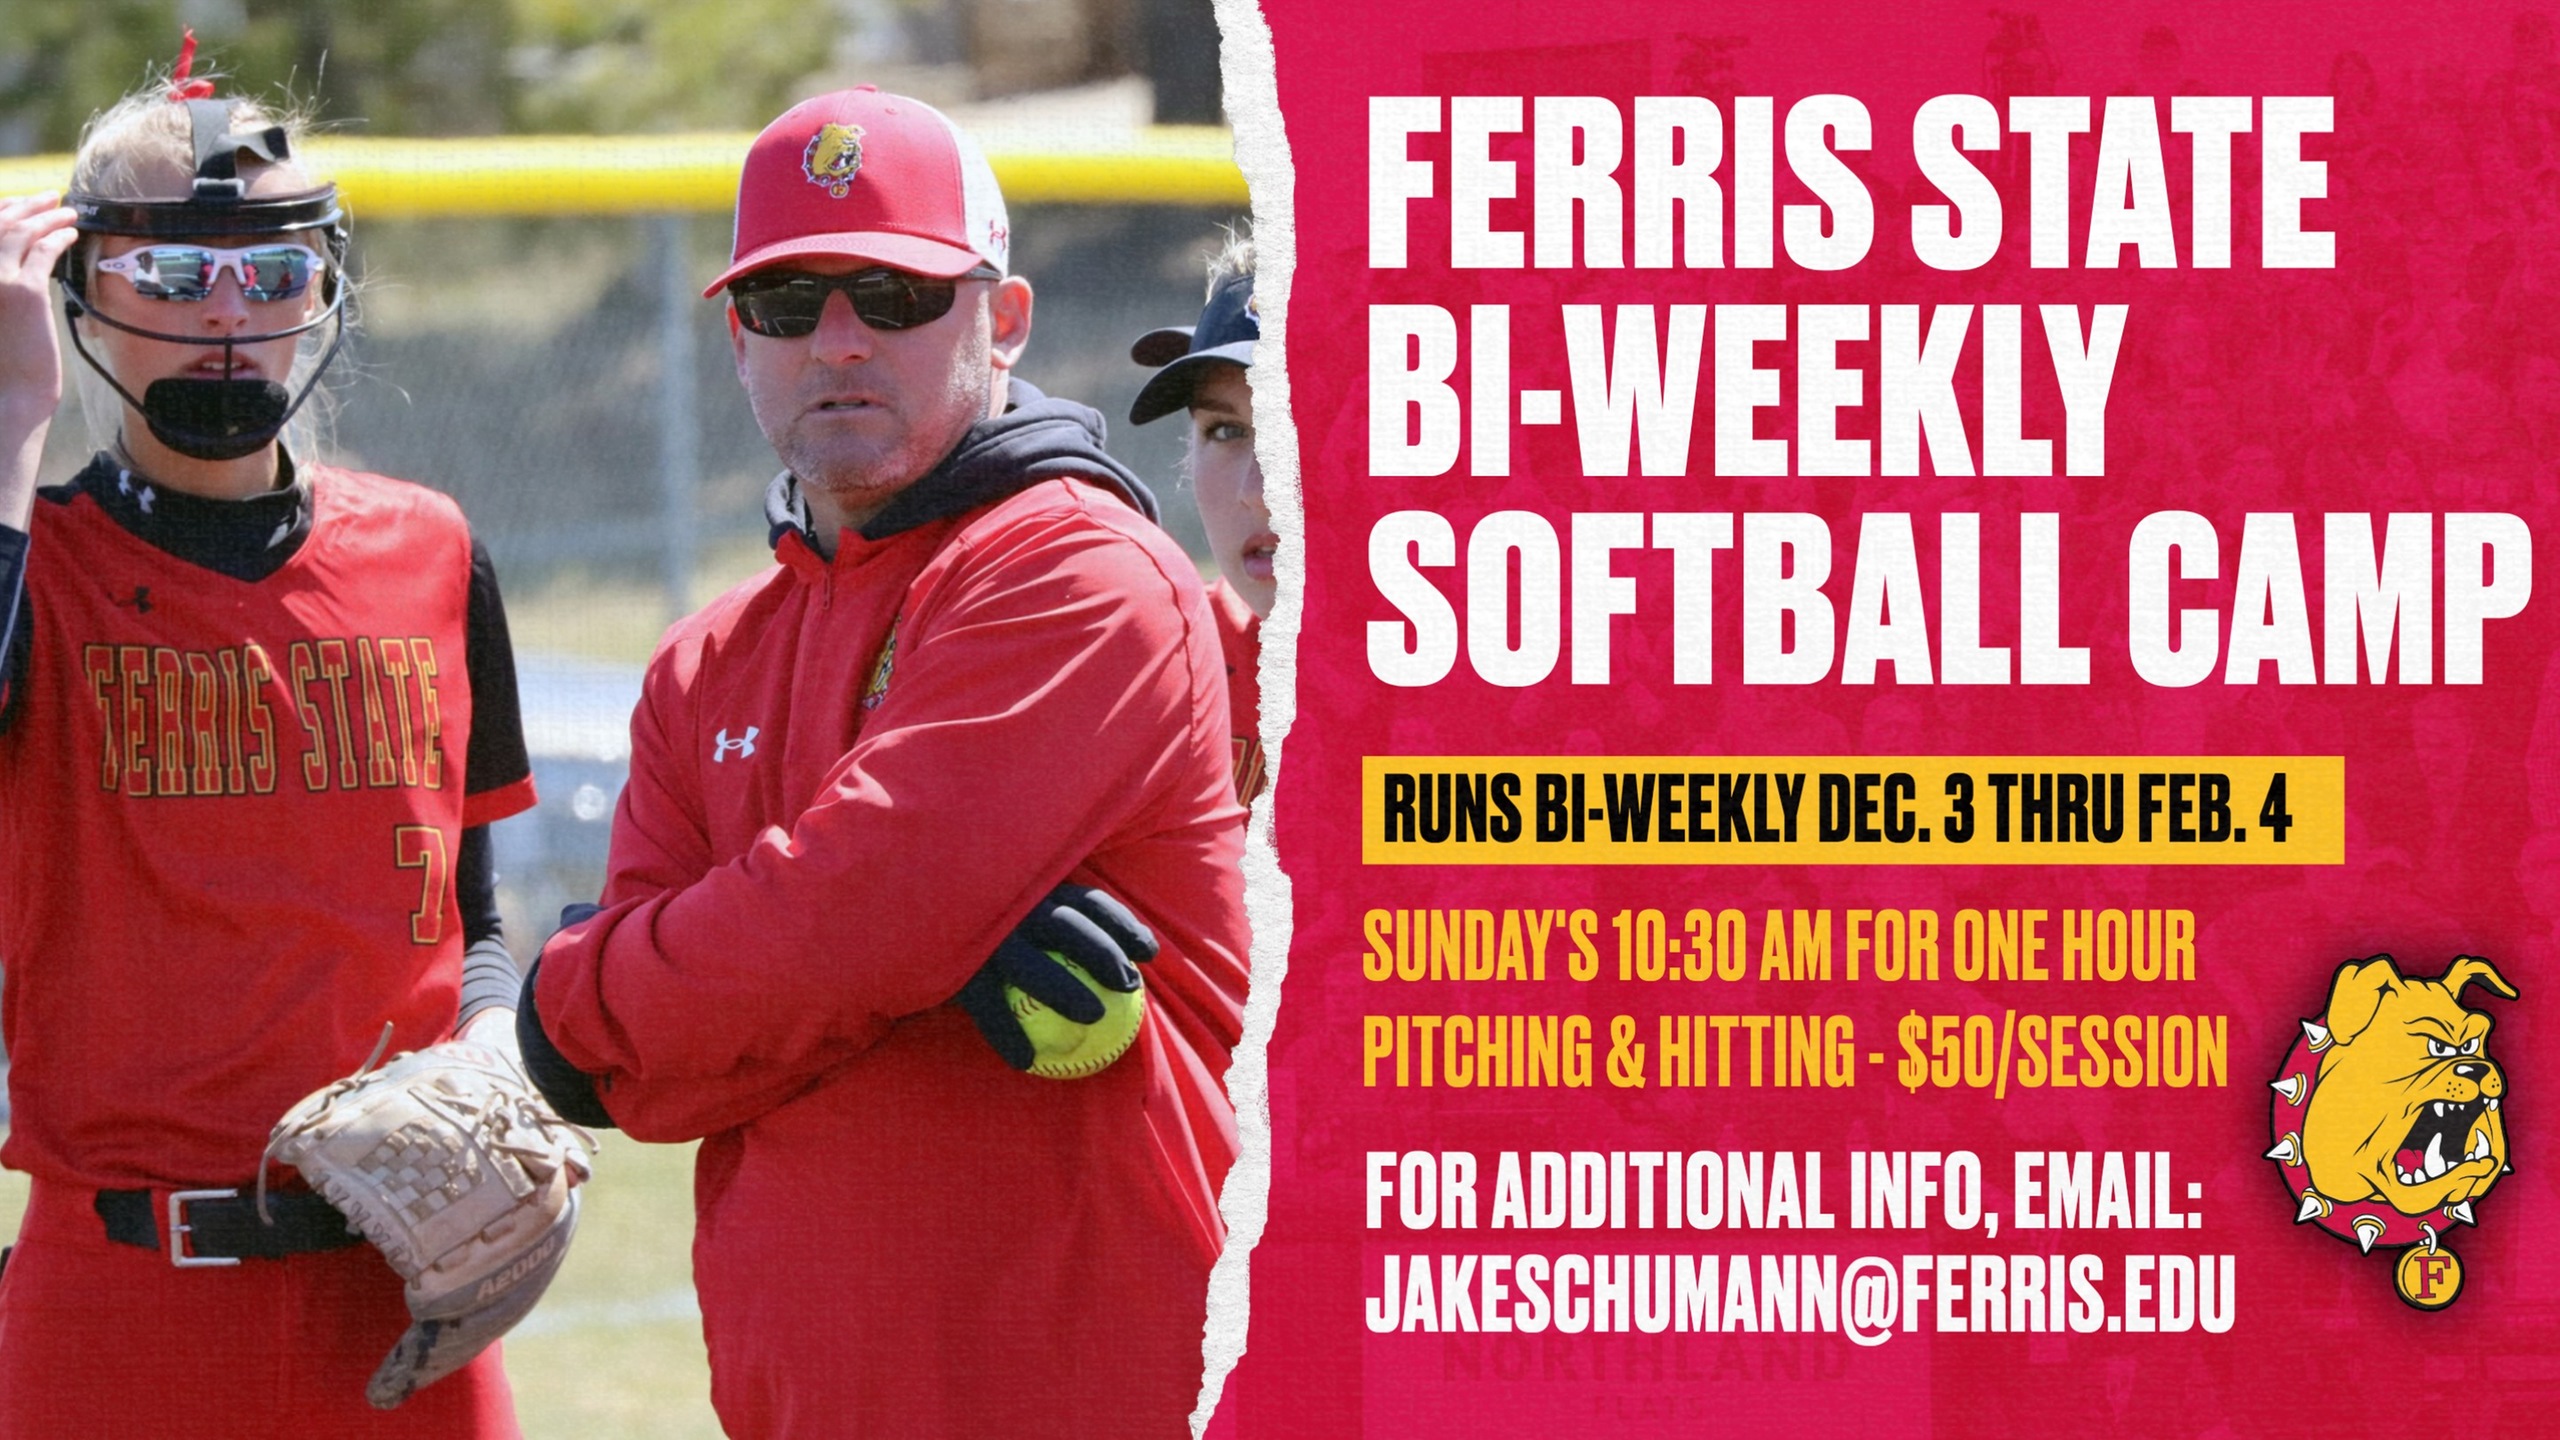 Ferris State Softball Offering Bi-Weekly Camp Beginning This Sunday